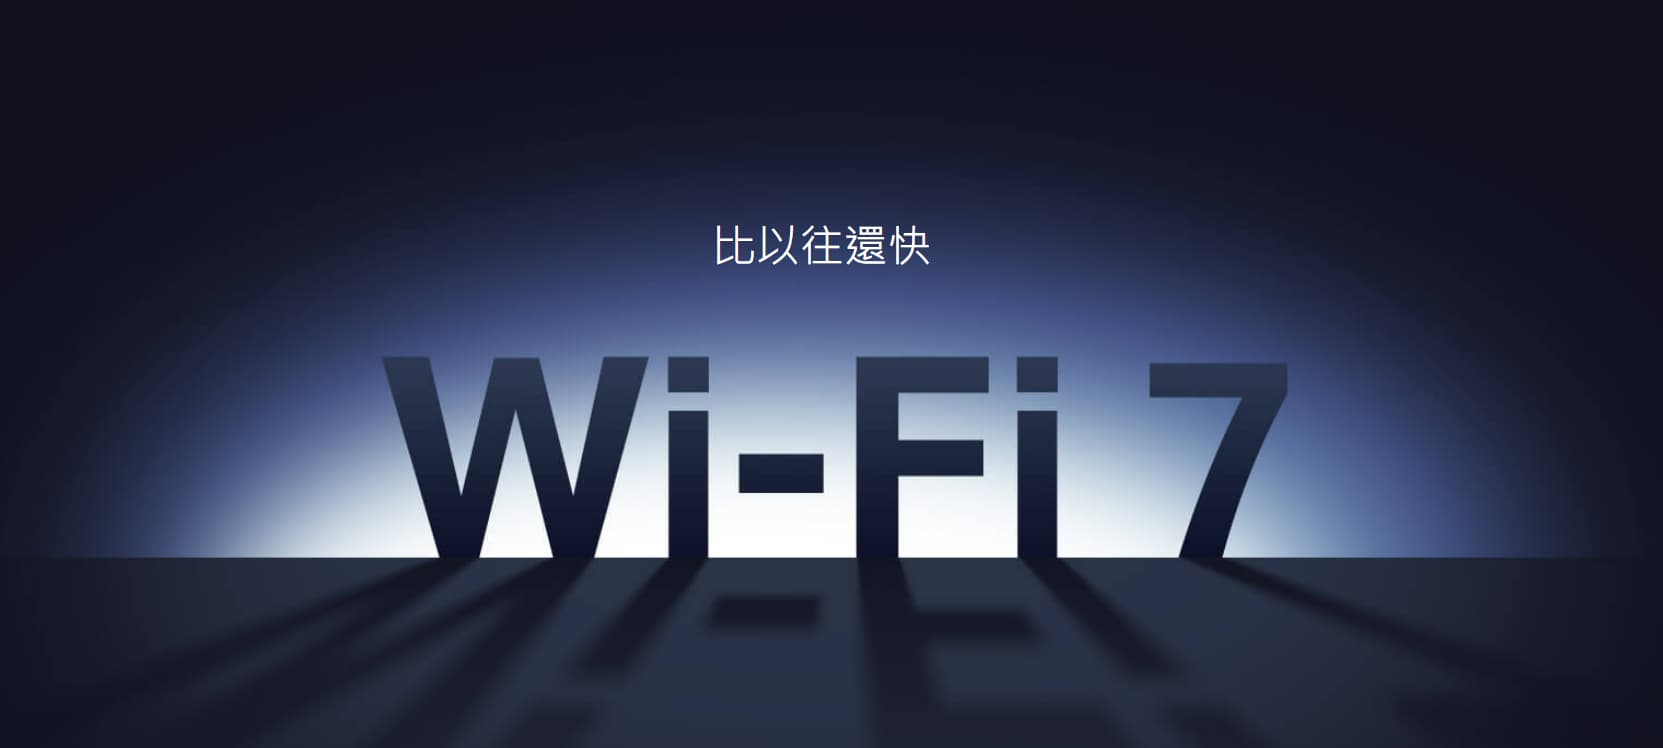 WiFi 7 是什麼